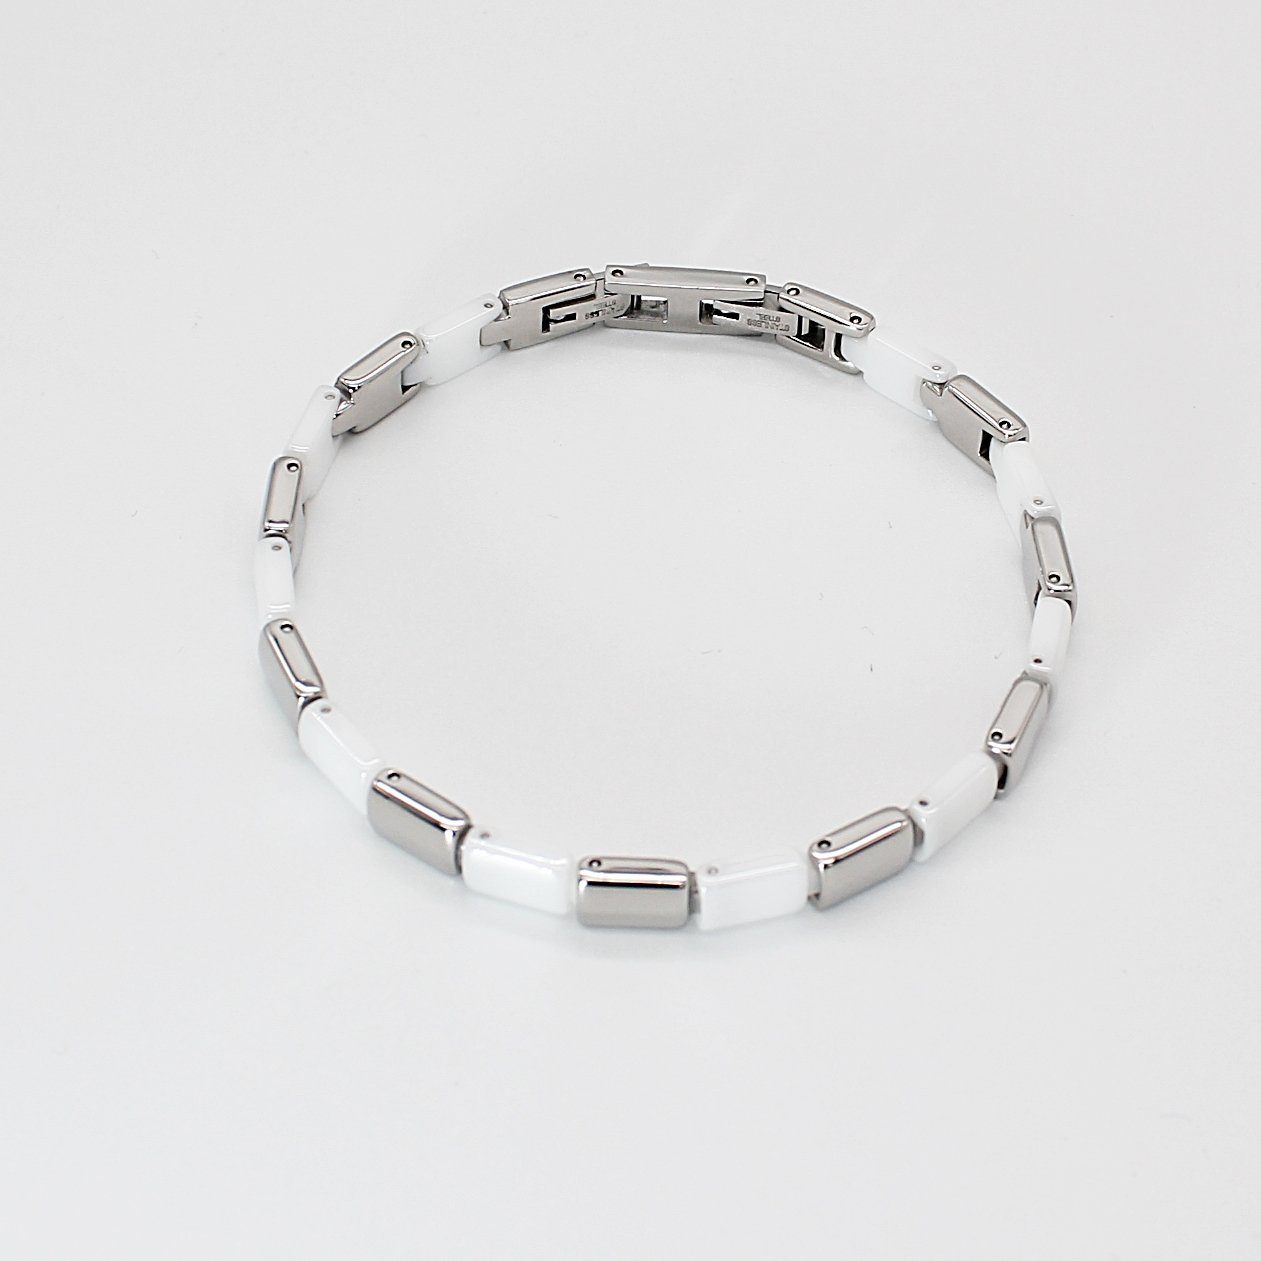 ELLAWIL Gliederarmband Edelstahl- Keramikarmband Handgelenkkette Damenarmband Weiß Silber (Armbandlänge 19 cm, Breite 6 mm x 3 mm), inklusive Geschenkschachtel